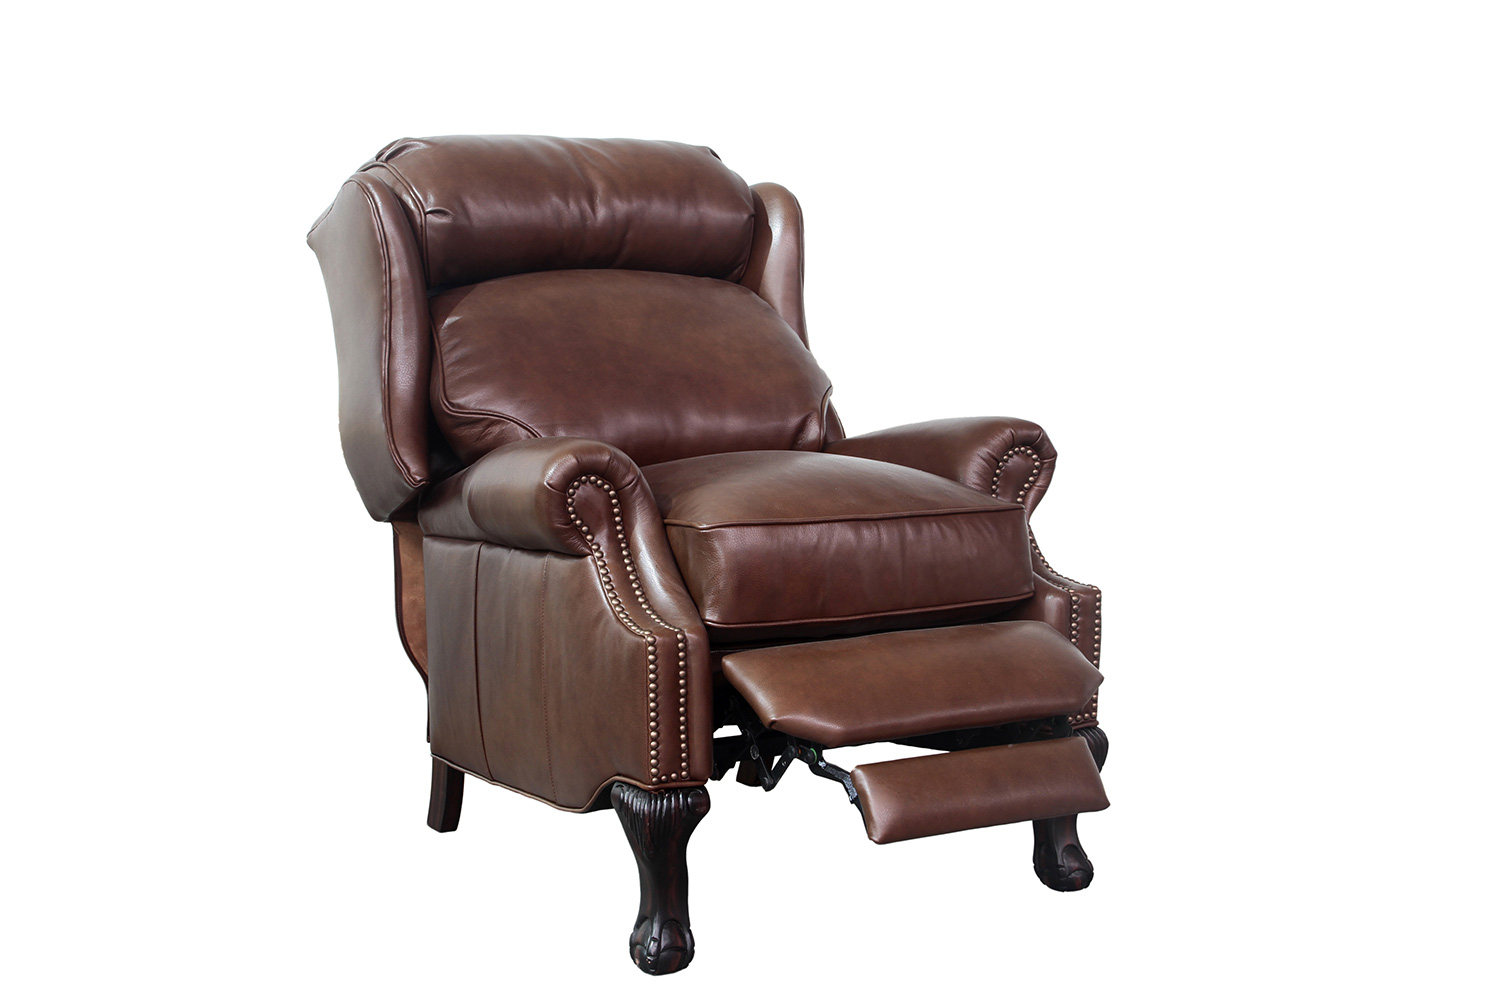 Barcalounger Danbury Recliner Chair - Shoreham Chocolate/All Leather